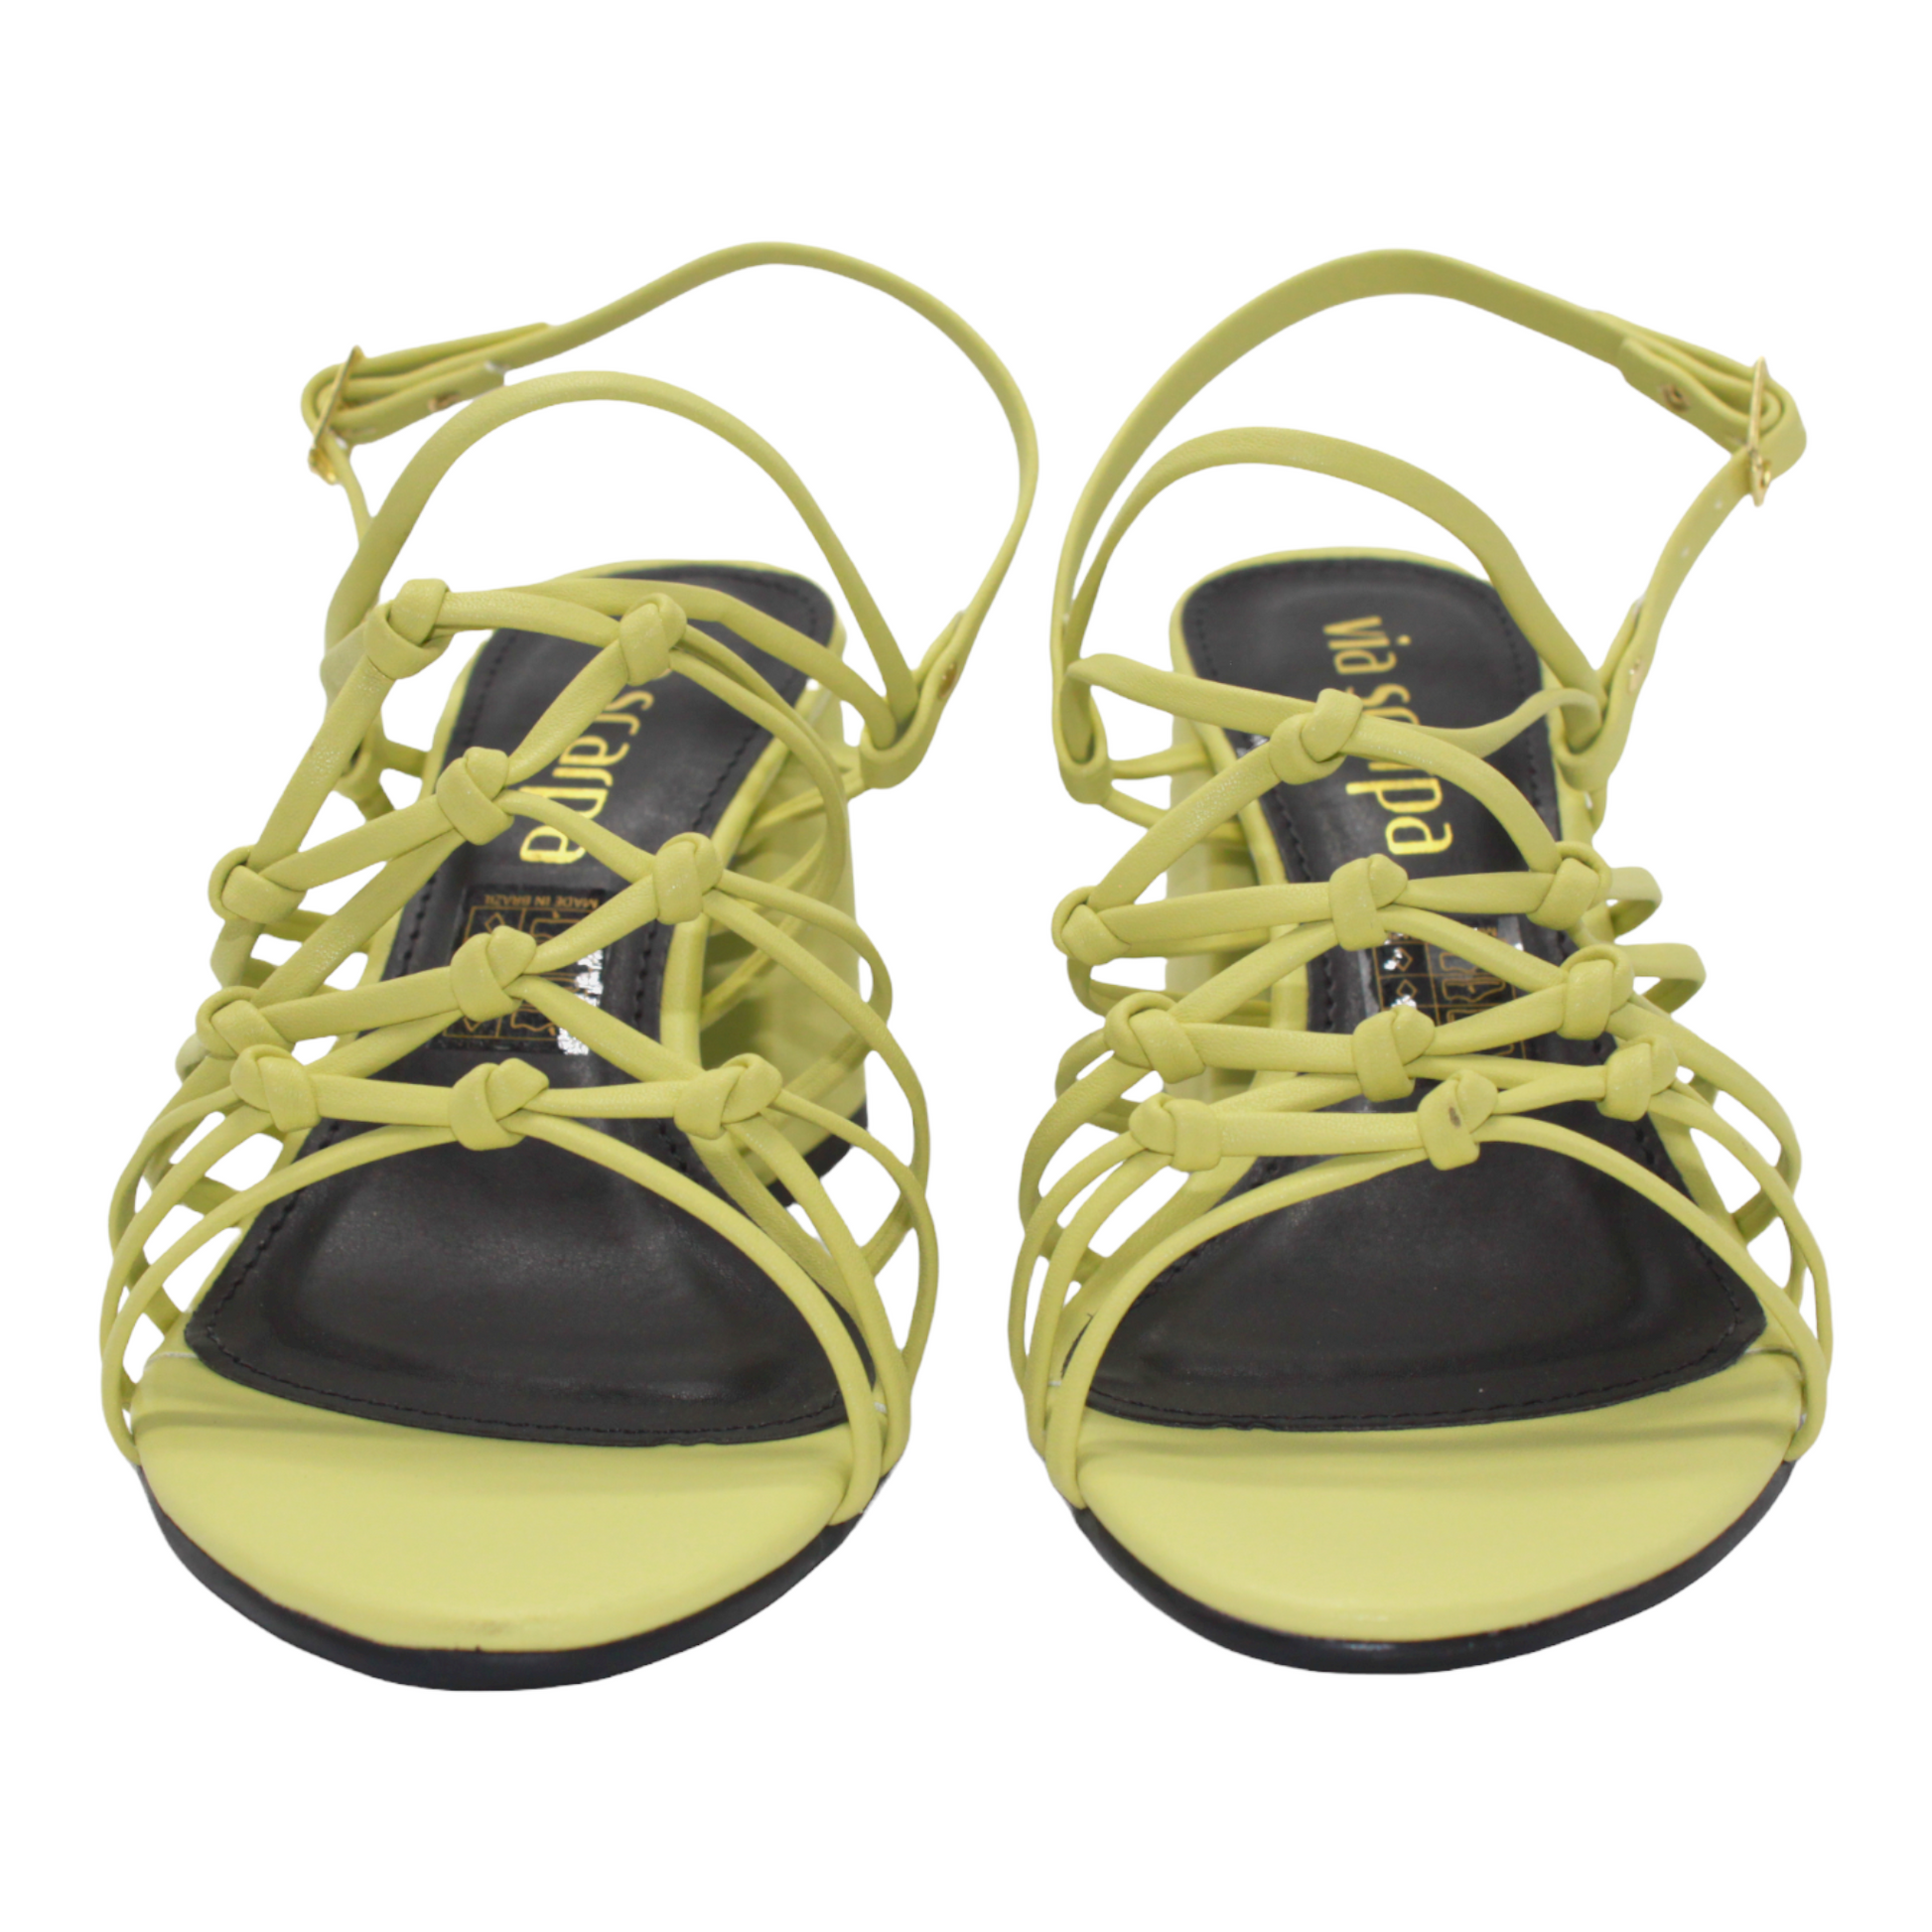 Strappy Lime Green Heeled Sandals - Julia & Santos 